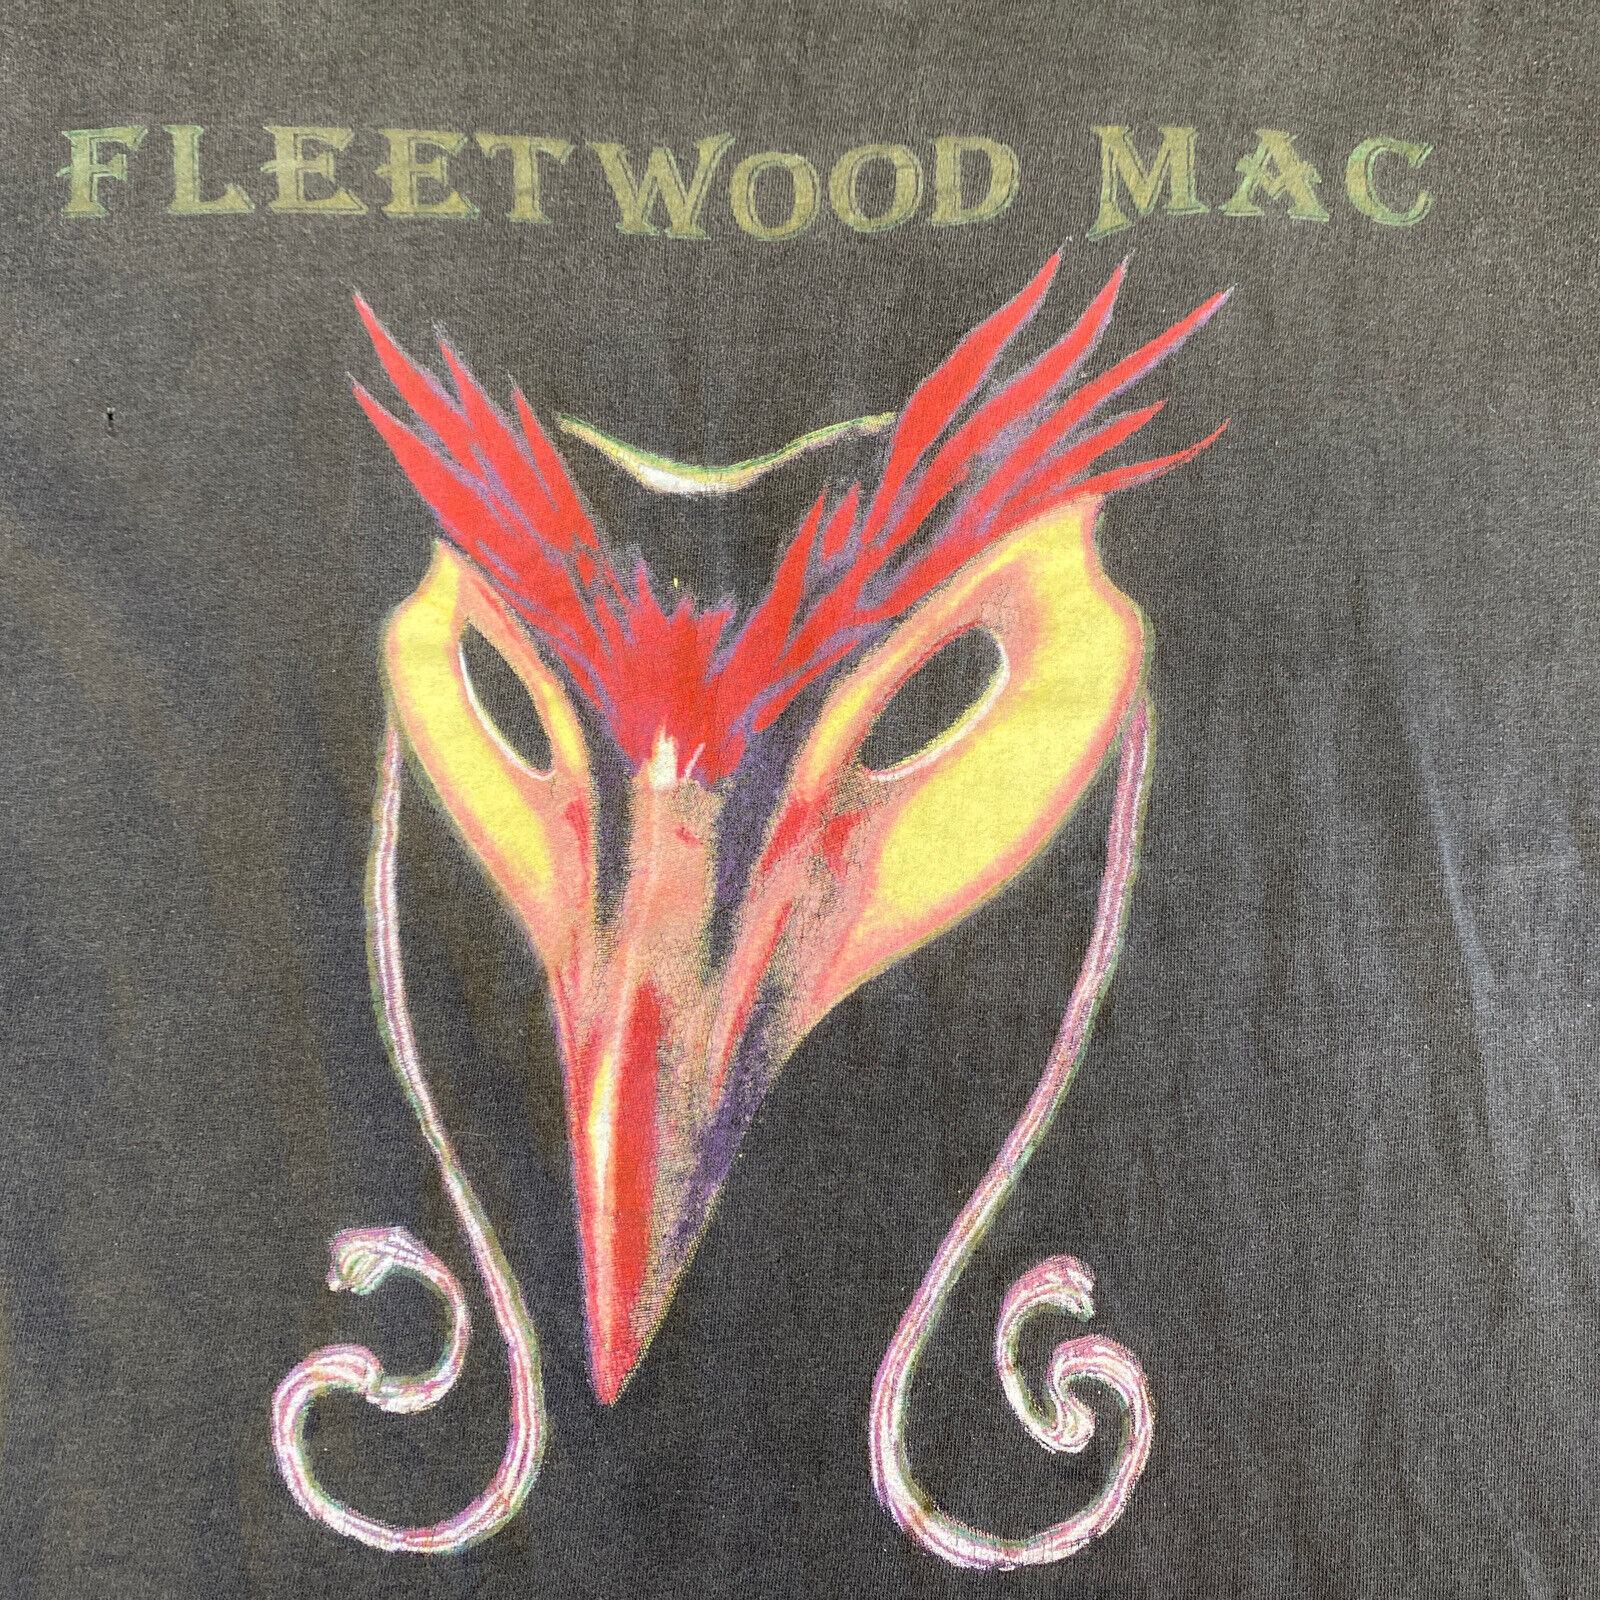 VTG Fleetwood Mac 1990 Behind The Mask Tour Band Shirt + VTG Staff Pass XL Read